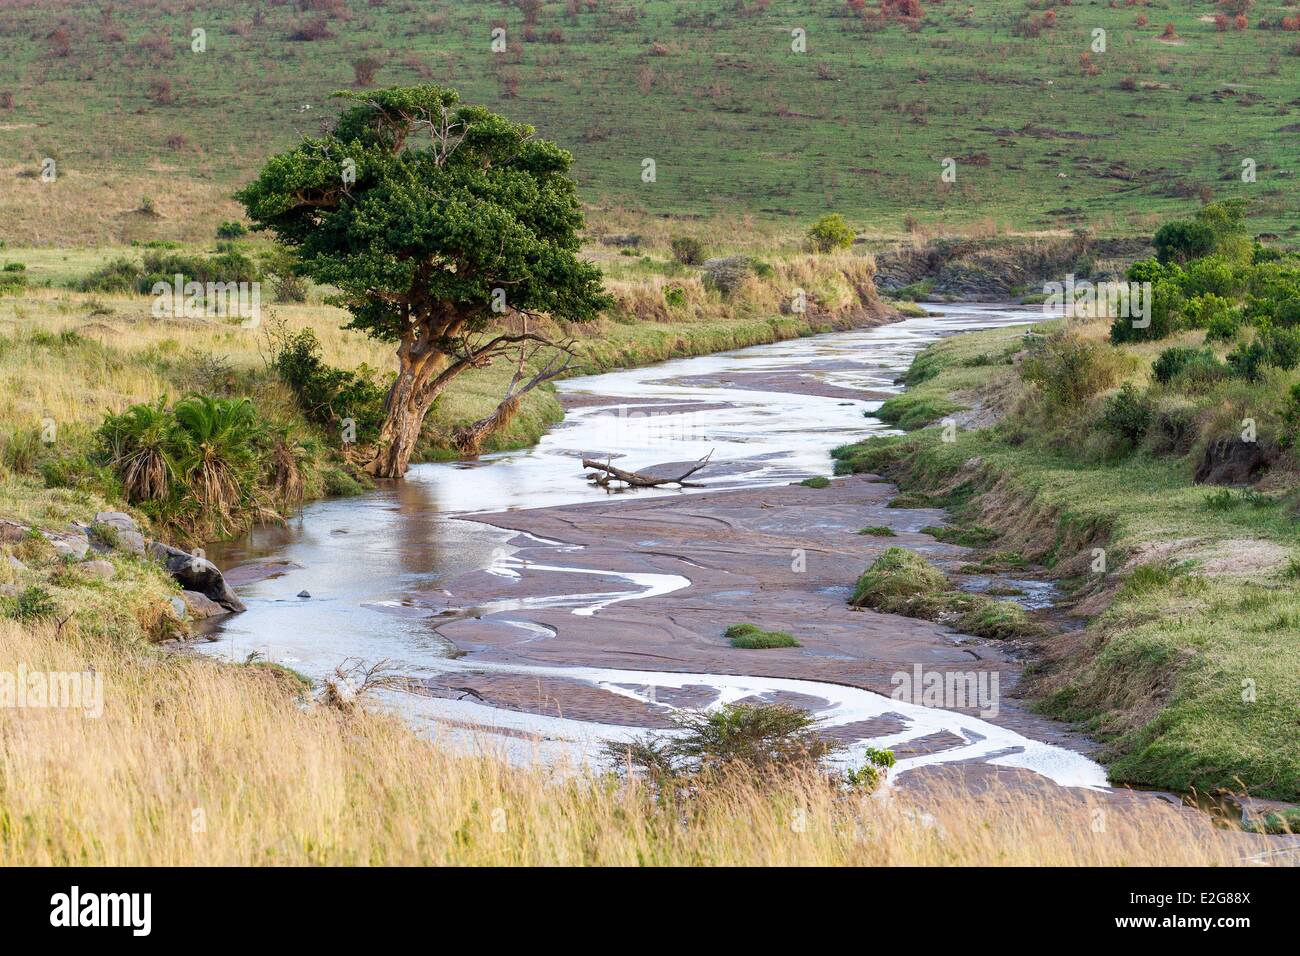 Kenia-Masai-Mara Wildgehege Sand river Stockfoto